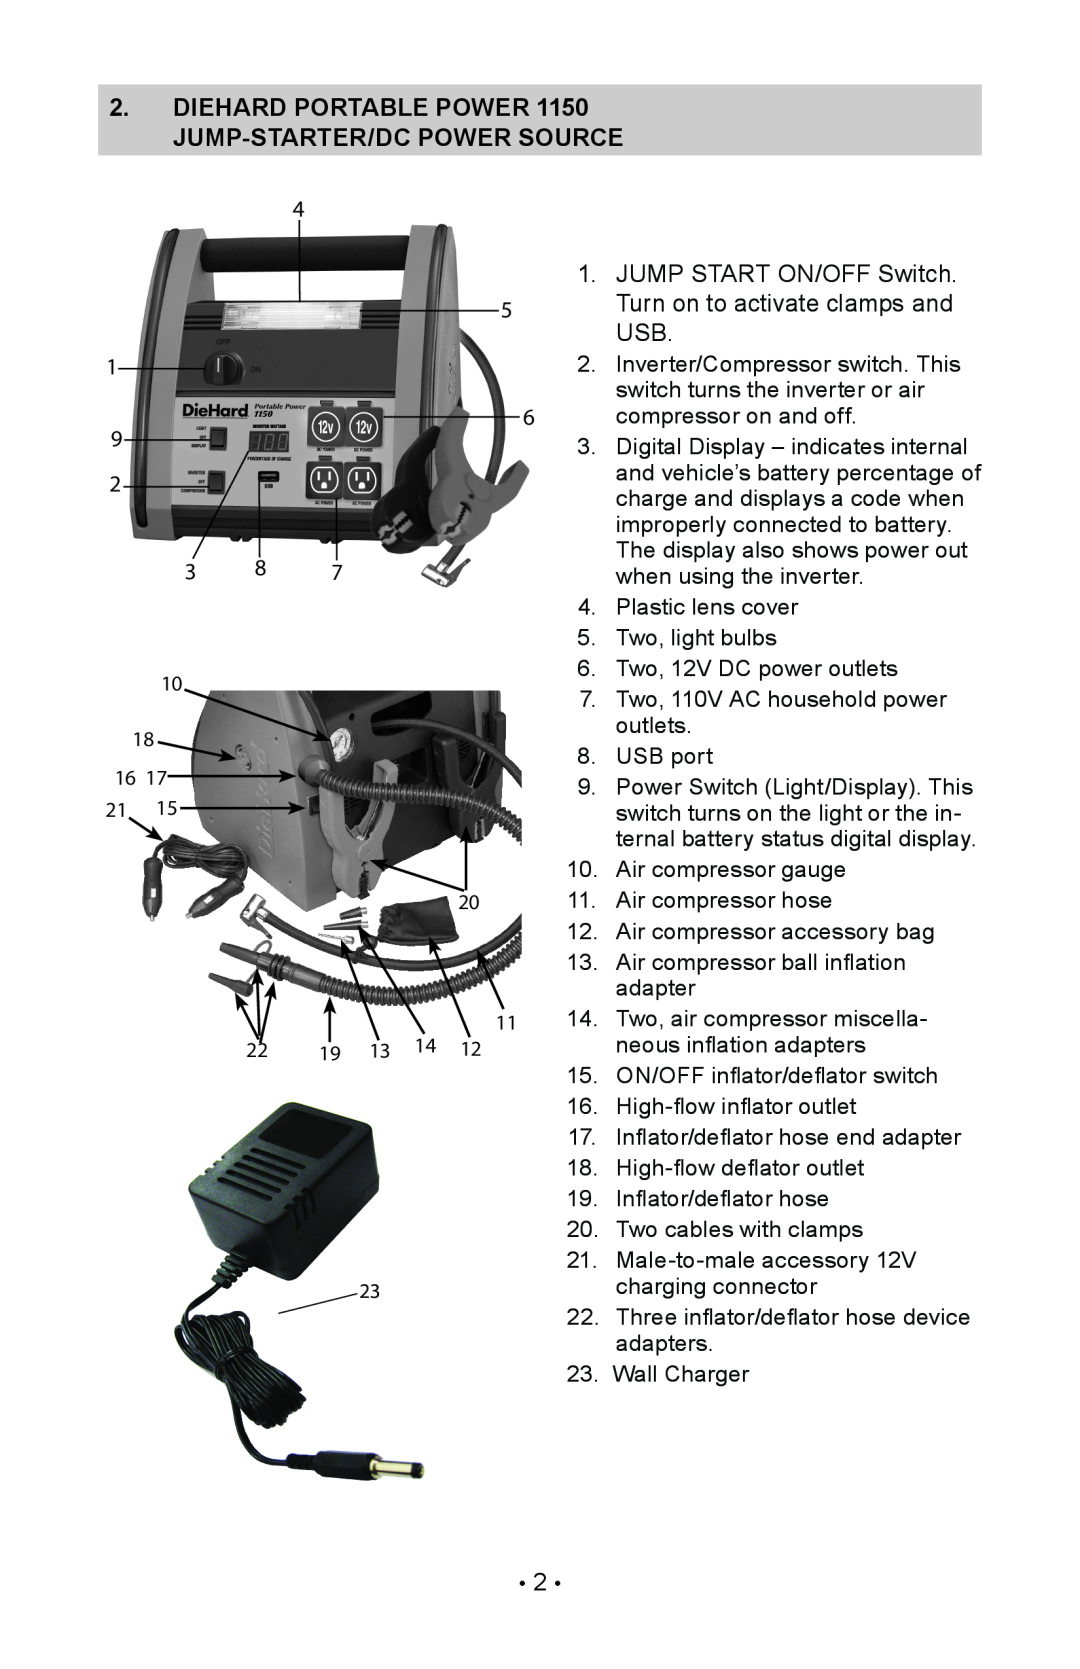 Sears 200.71988 manual diehard portable power 1150 jump-starter/dc power source 